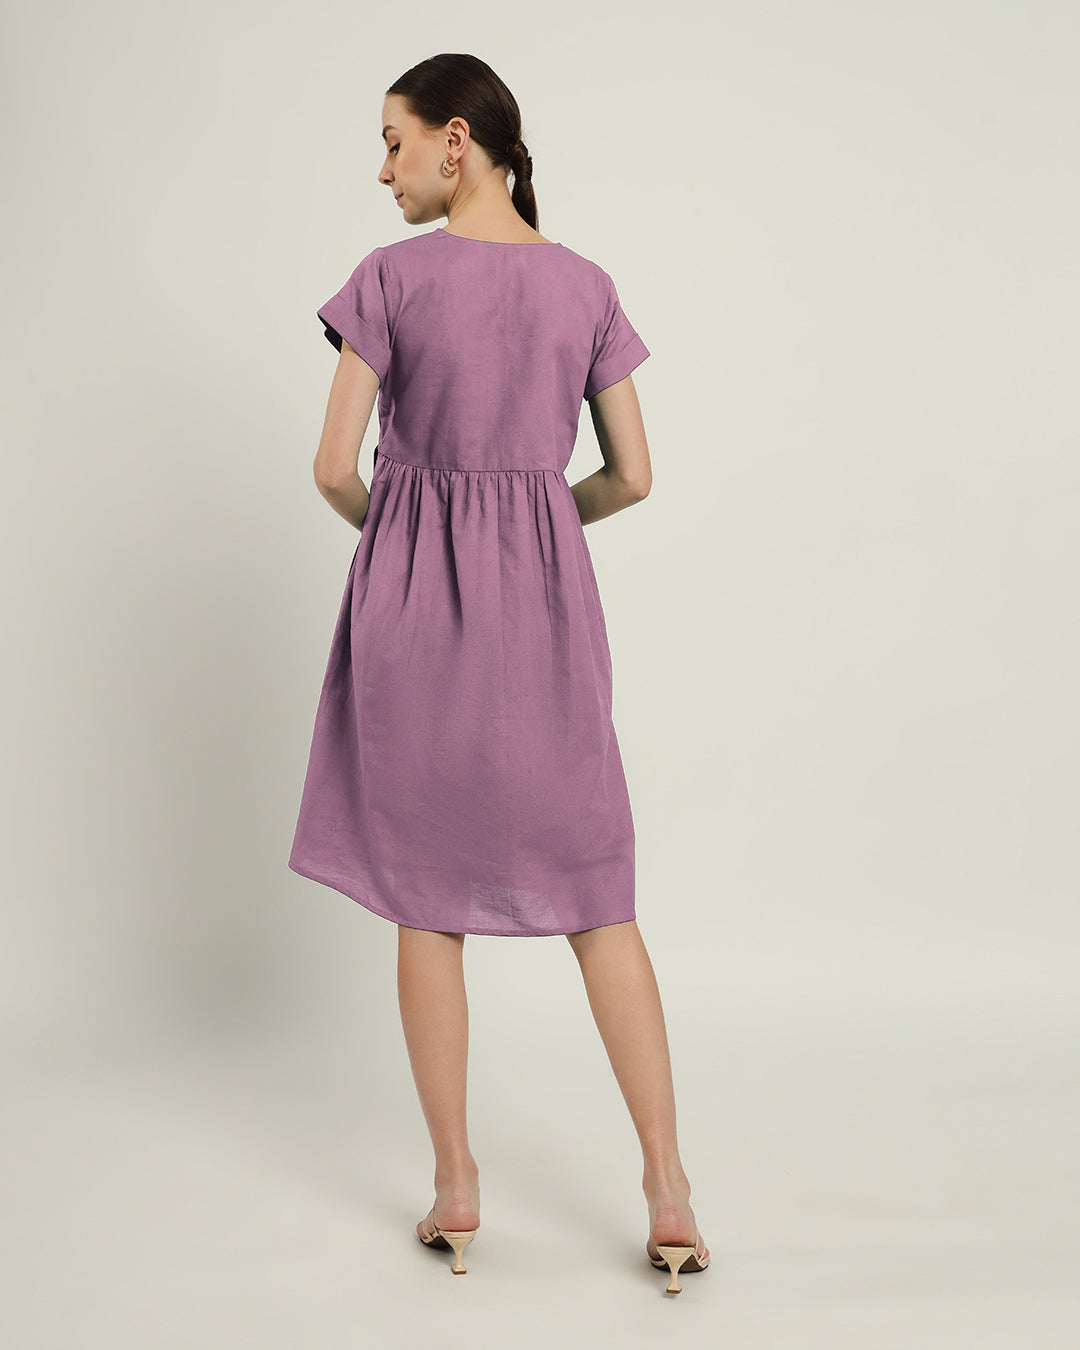 The Valence Purple Swirl Dress